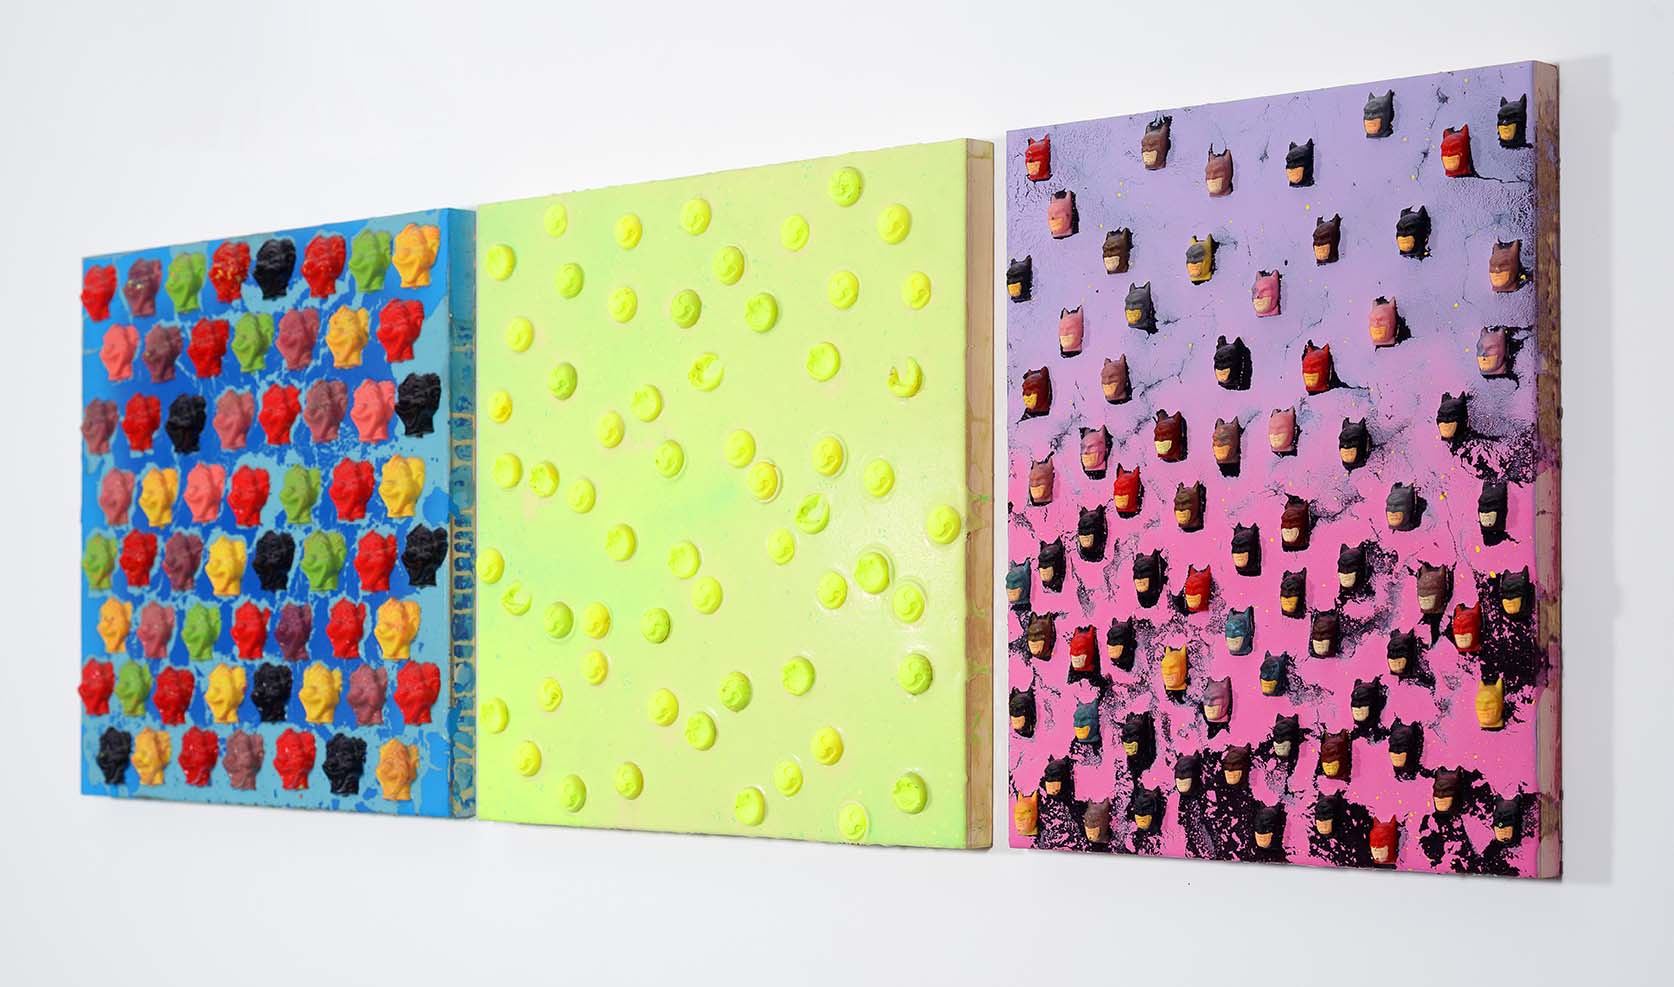 Bruno Miguel, Smile -Candy Series, Poliester, resina e spray sobre madeira, 50 x 145 cm, 2017 (lateral)